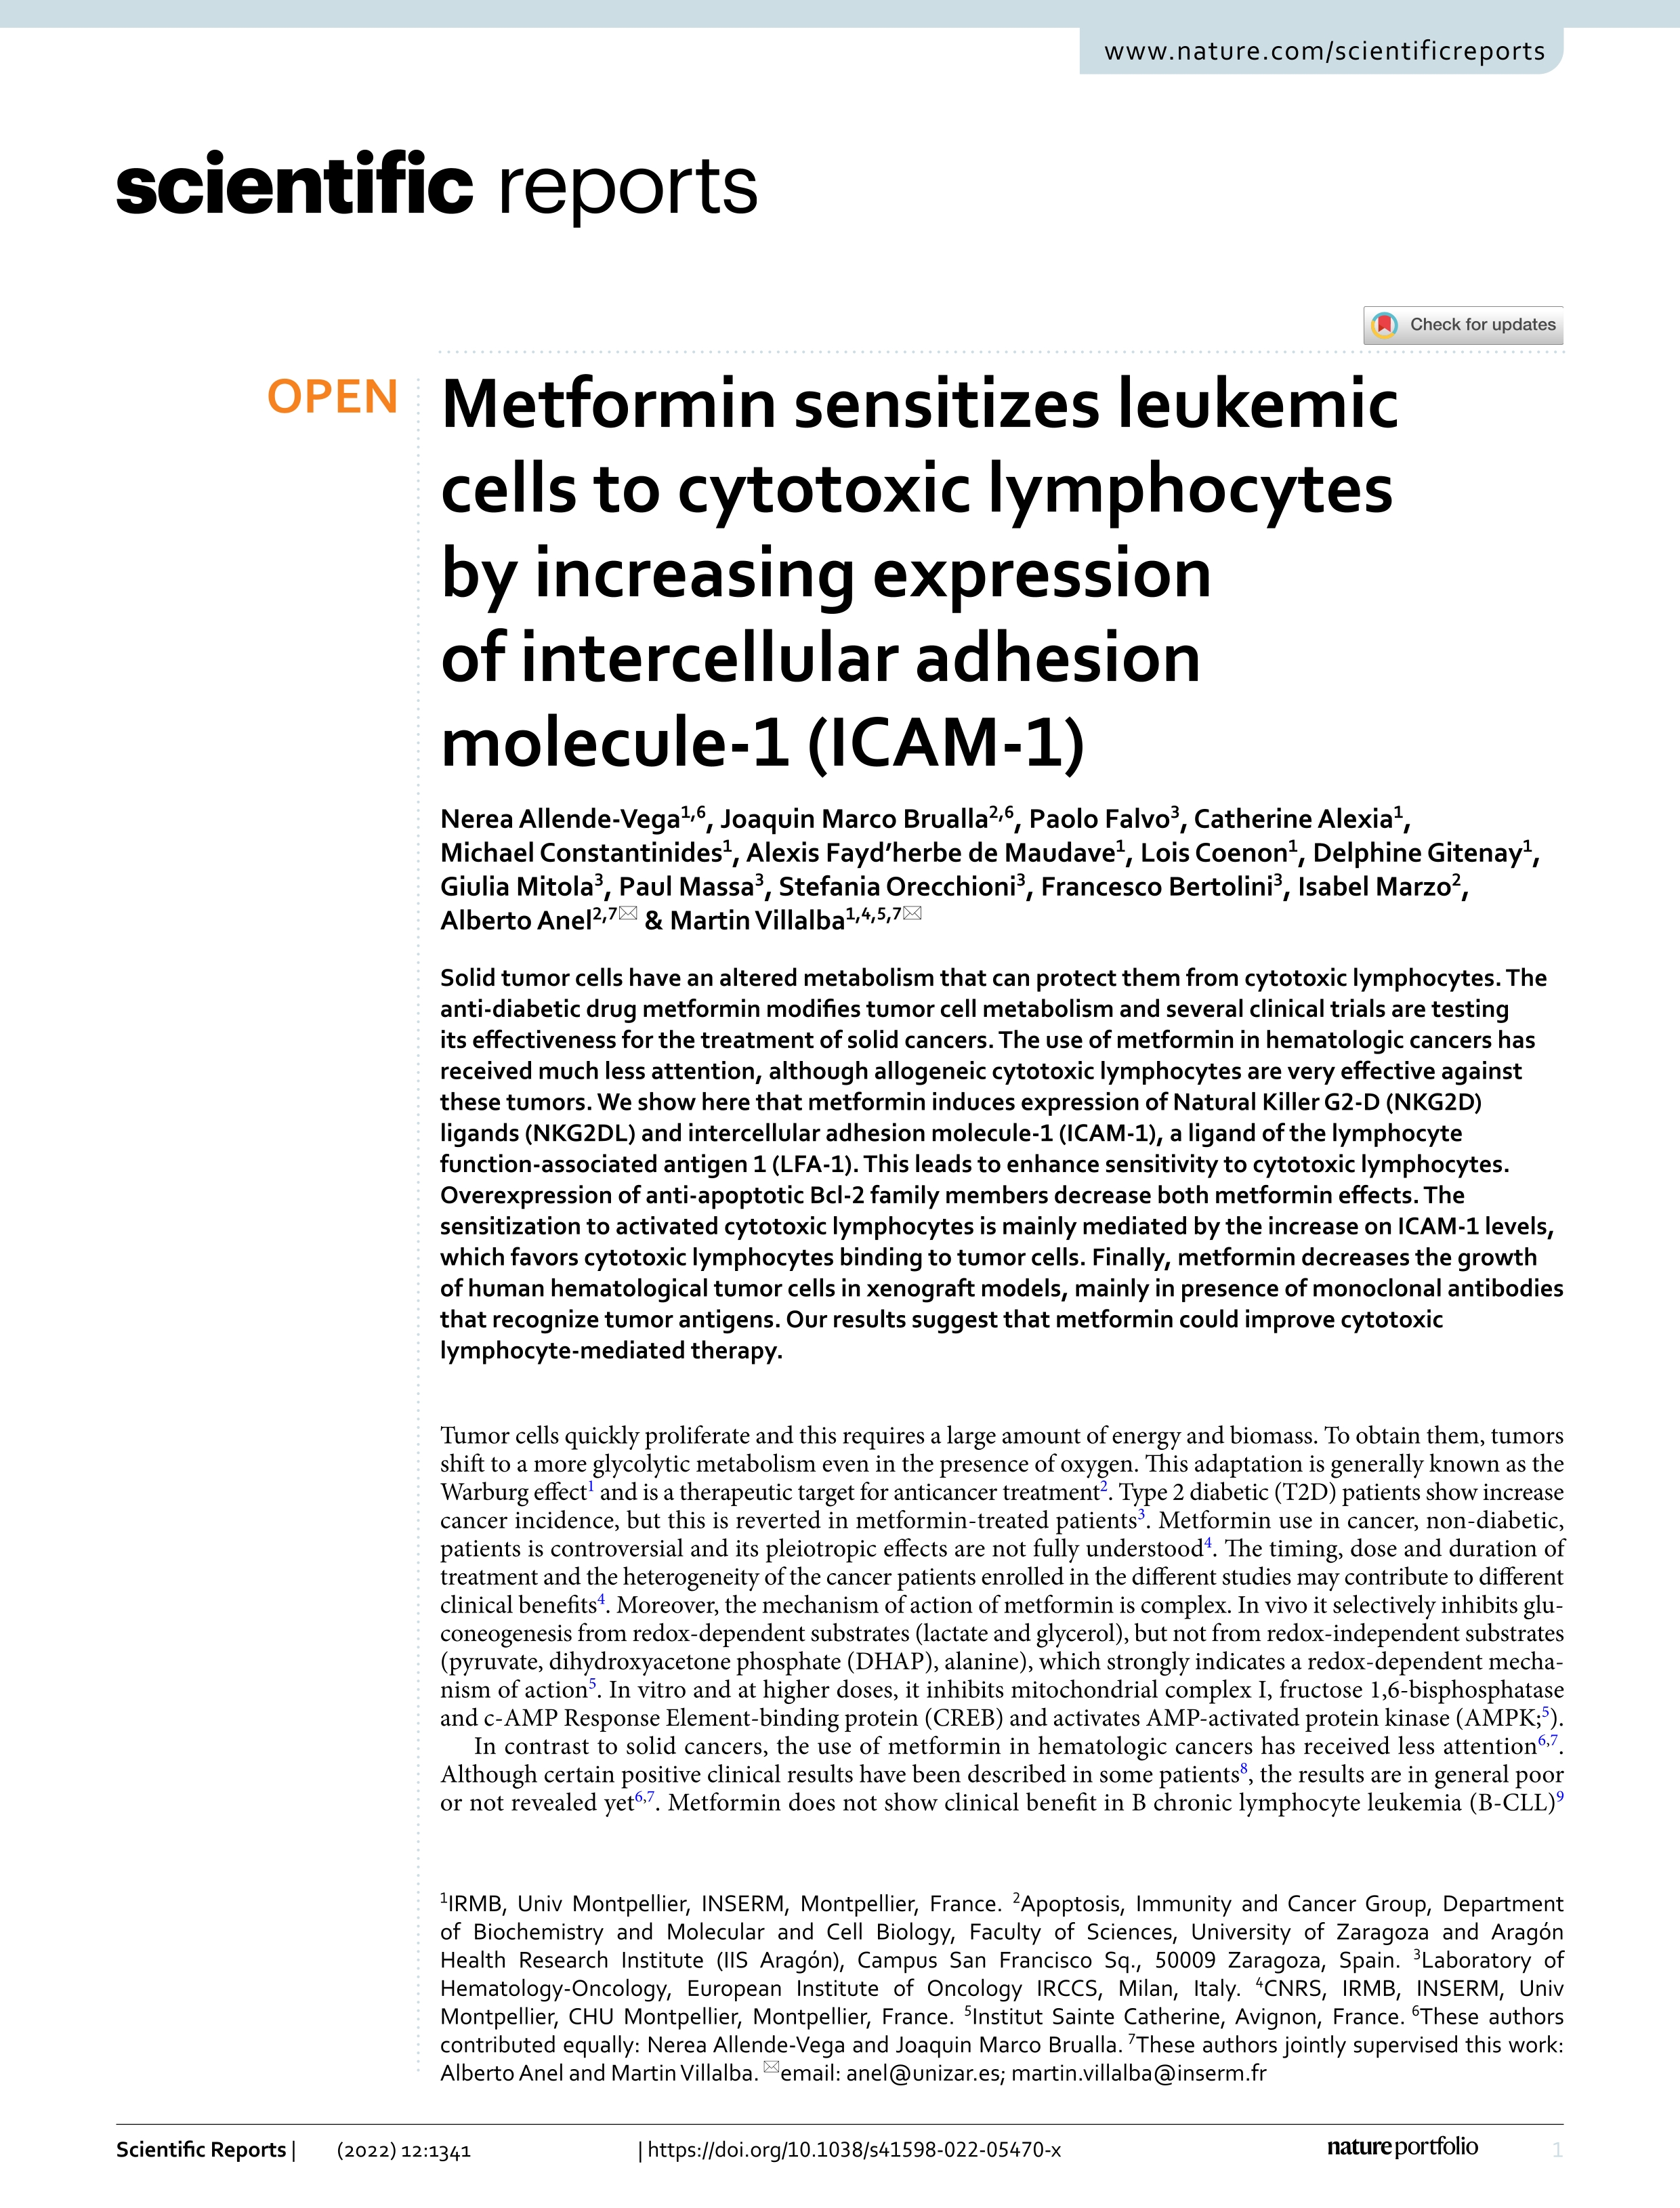 Metformin sensitizes leukemic cells to cytotoxic lymphocytes by increasing expression of intercellular adhesion molecule-1 (ICAM-1)